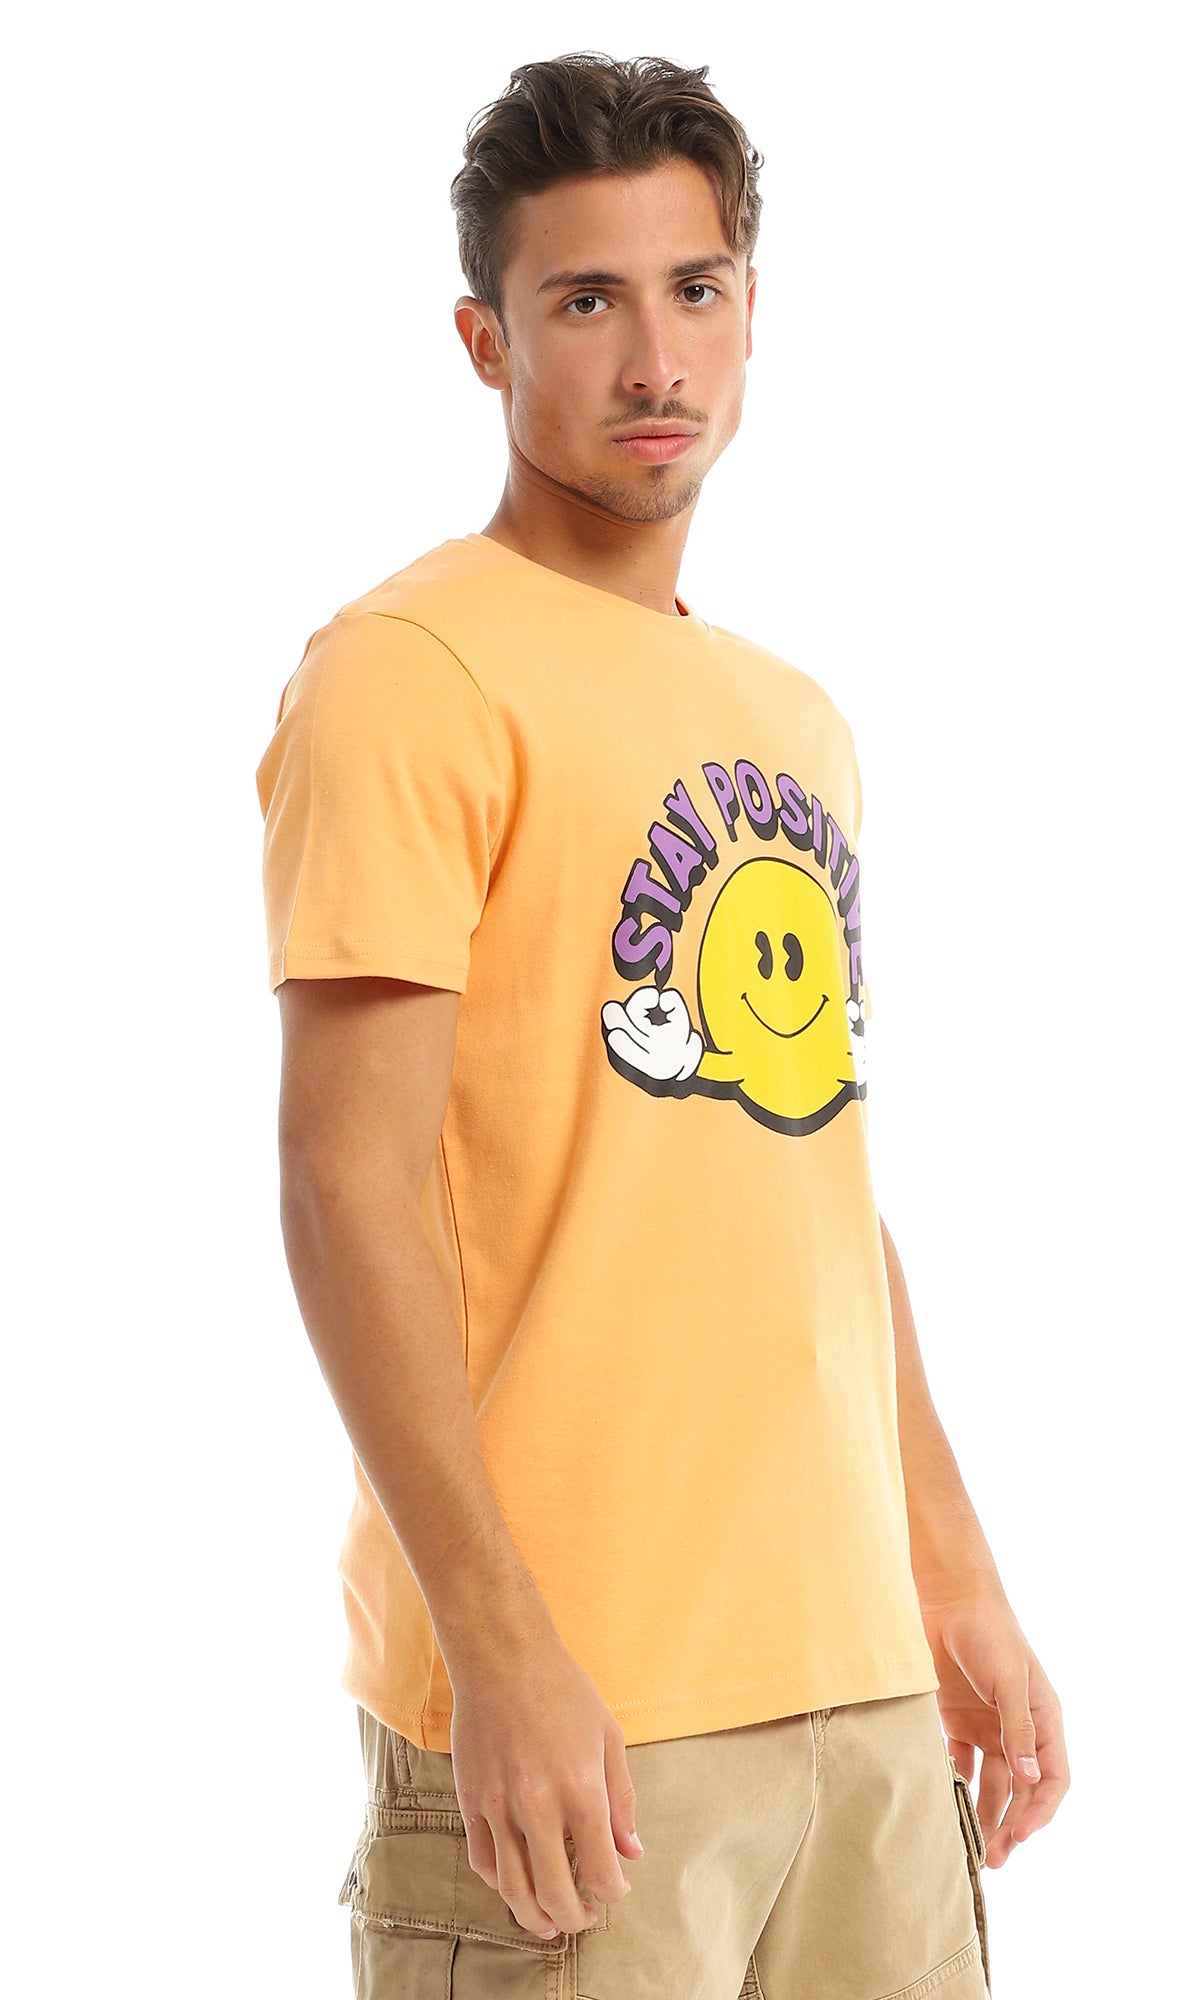 97410 "Stay Positive" Printed Orange Round T-Shirt